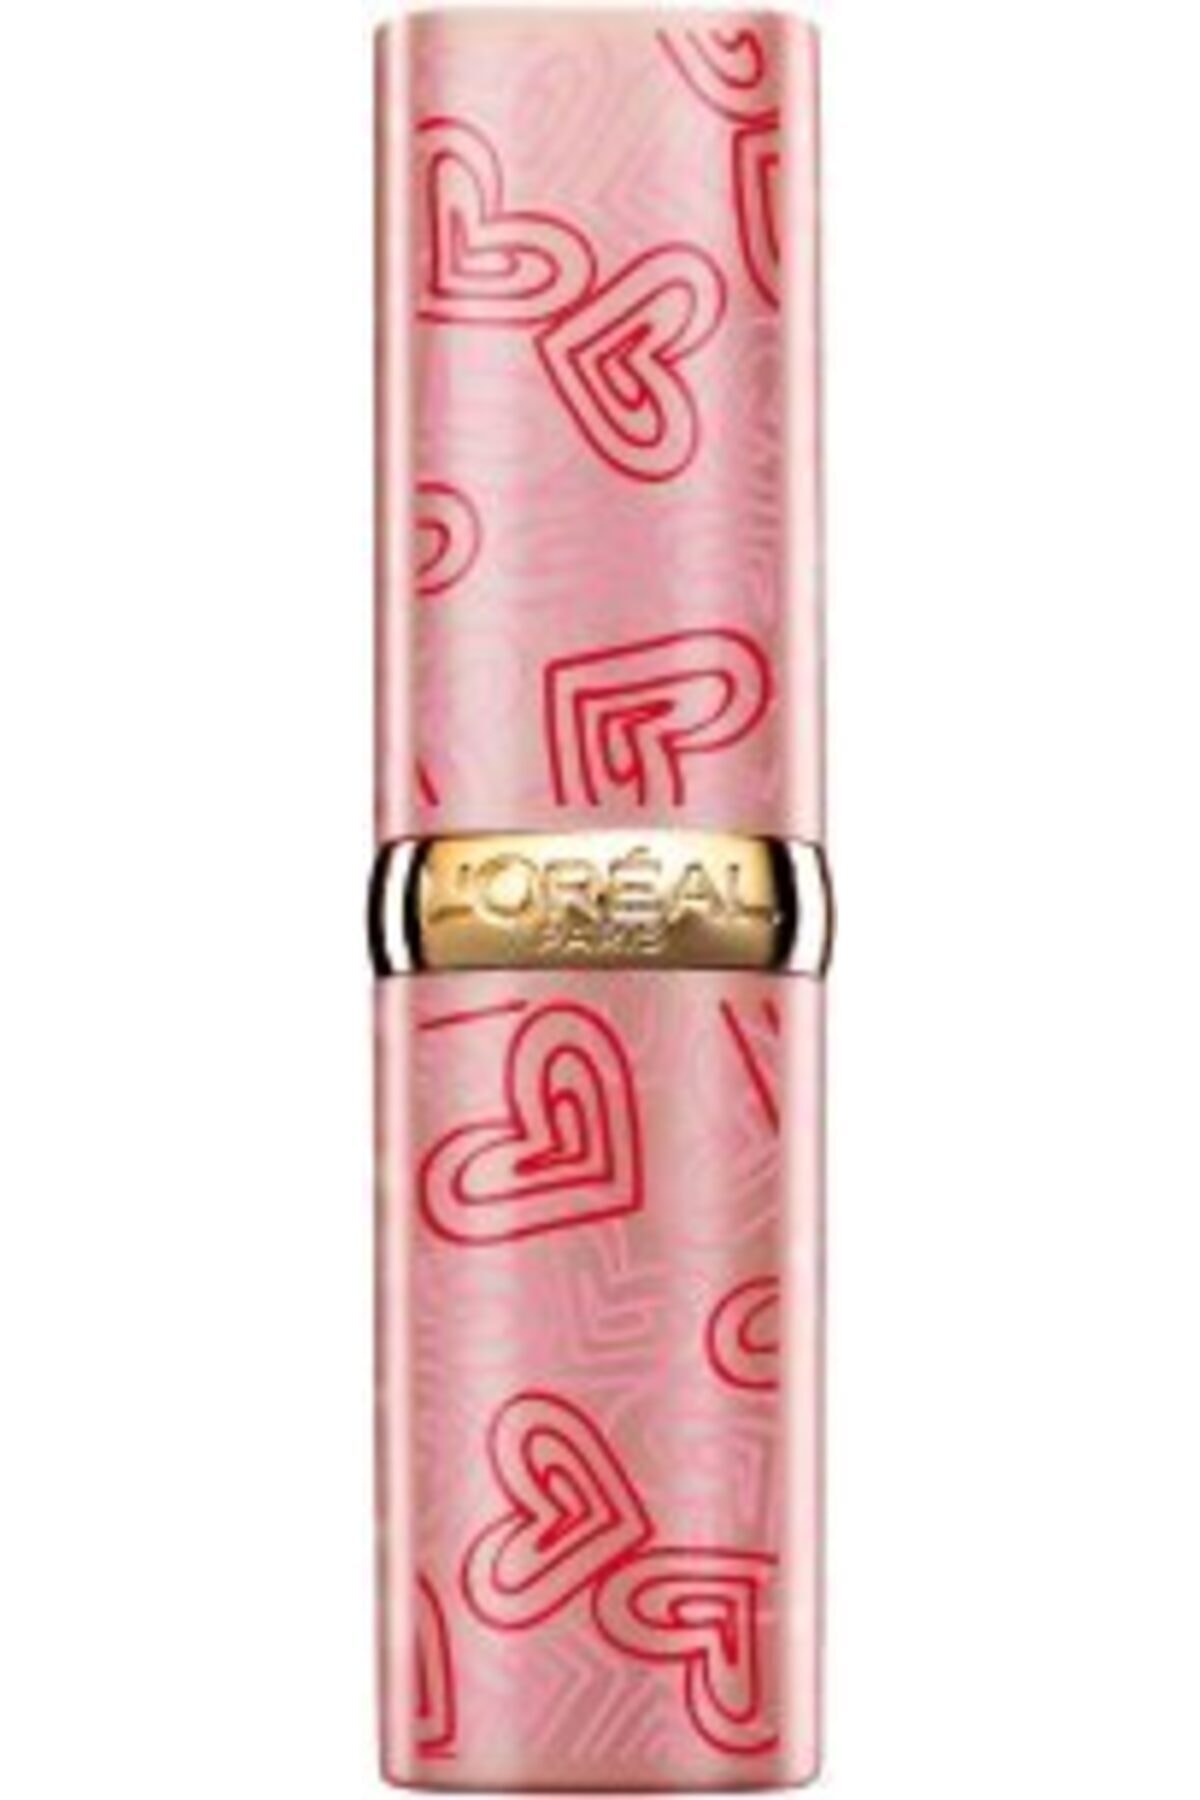 L'Oreal Paris رژ لب Color Riche طرح ویژه ولنتاین و روز زن شماره 303 رنگ صورتی گل رز